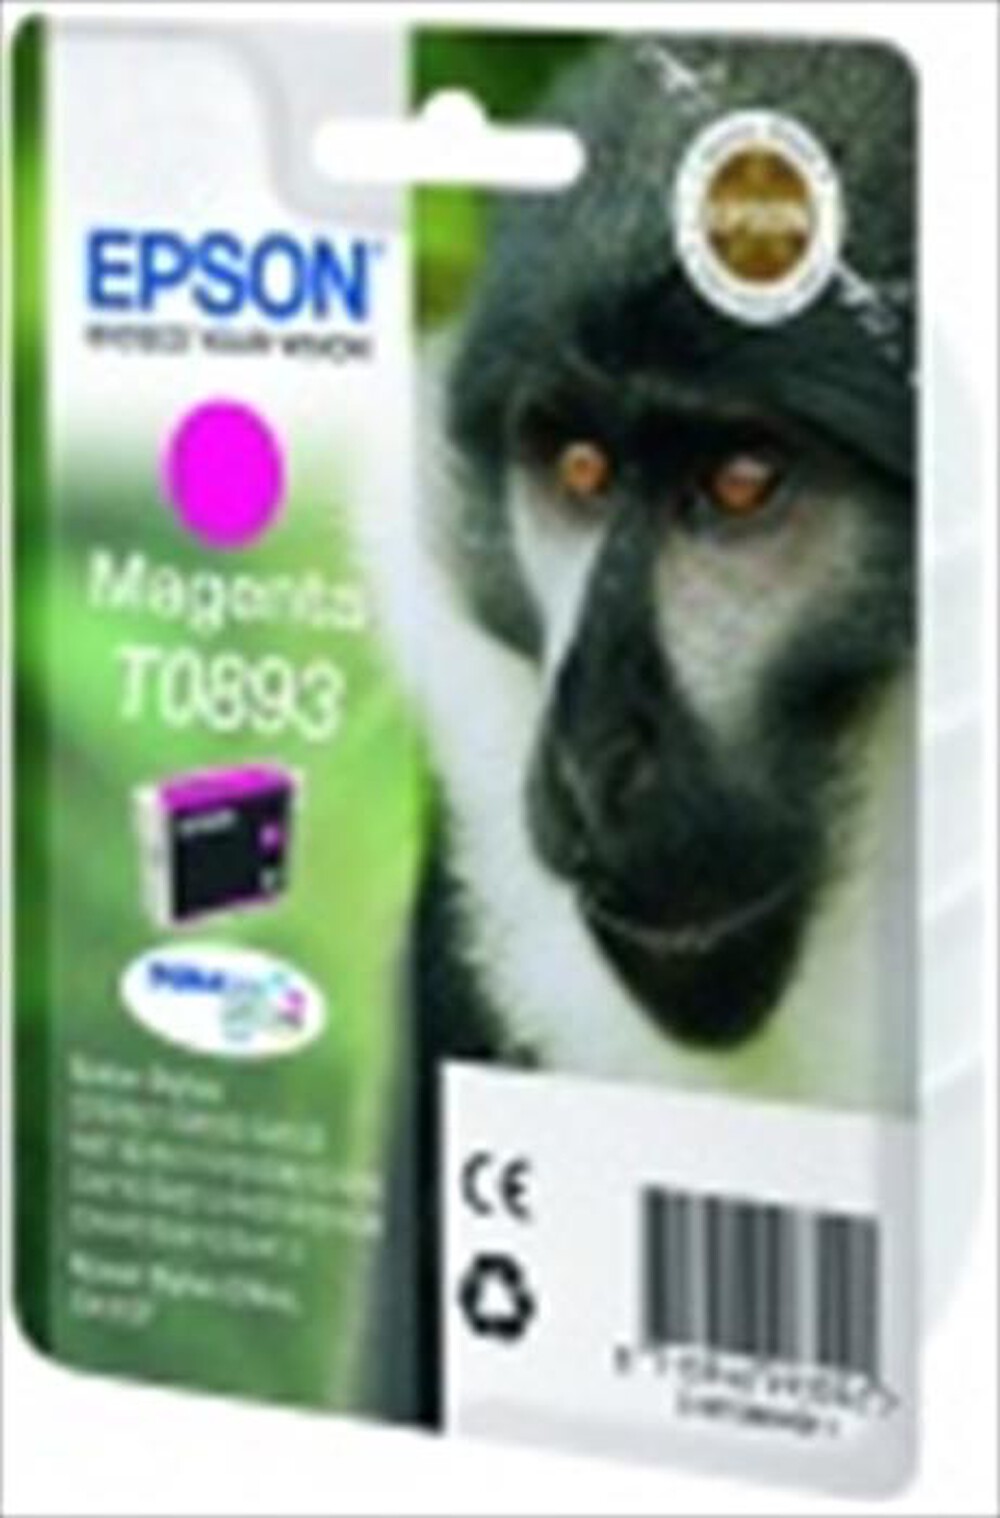 "EPSON - Cartuccia inchiostro magenta C13T08934021 - Magenta"